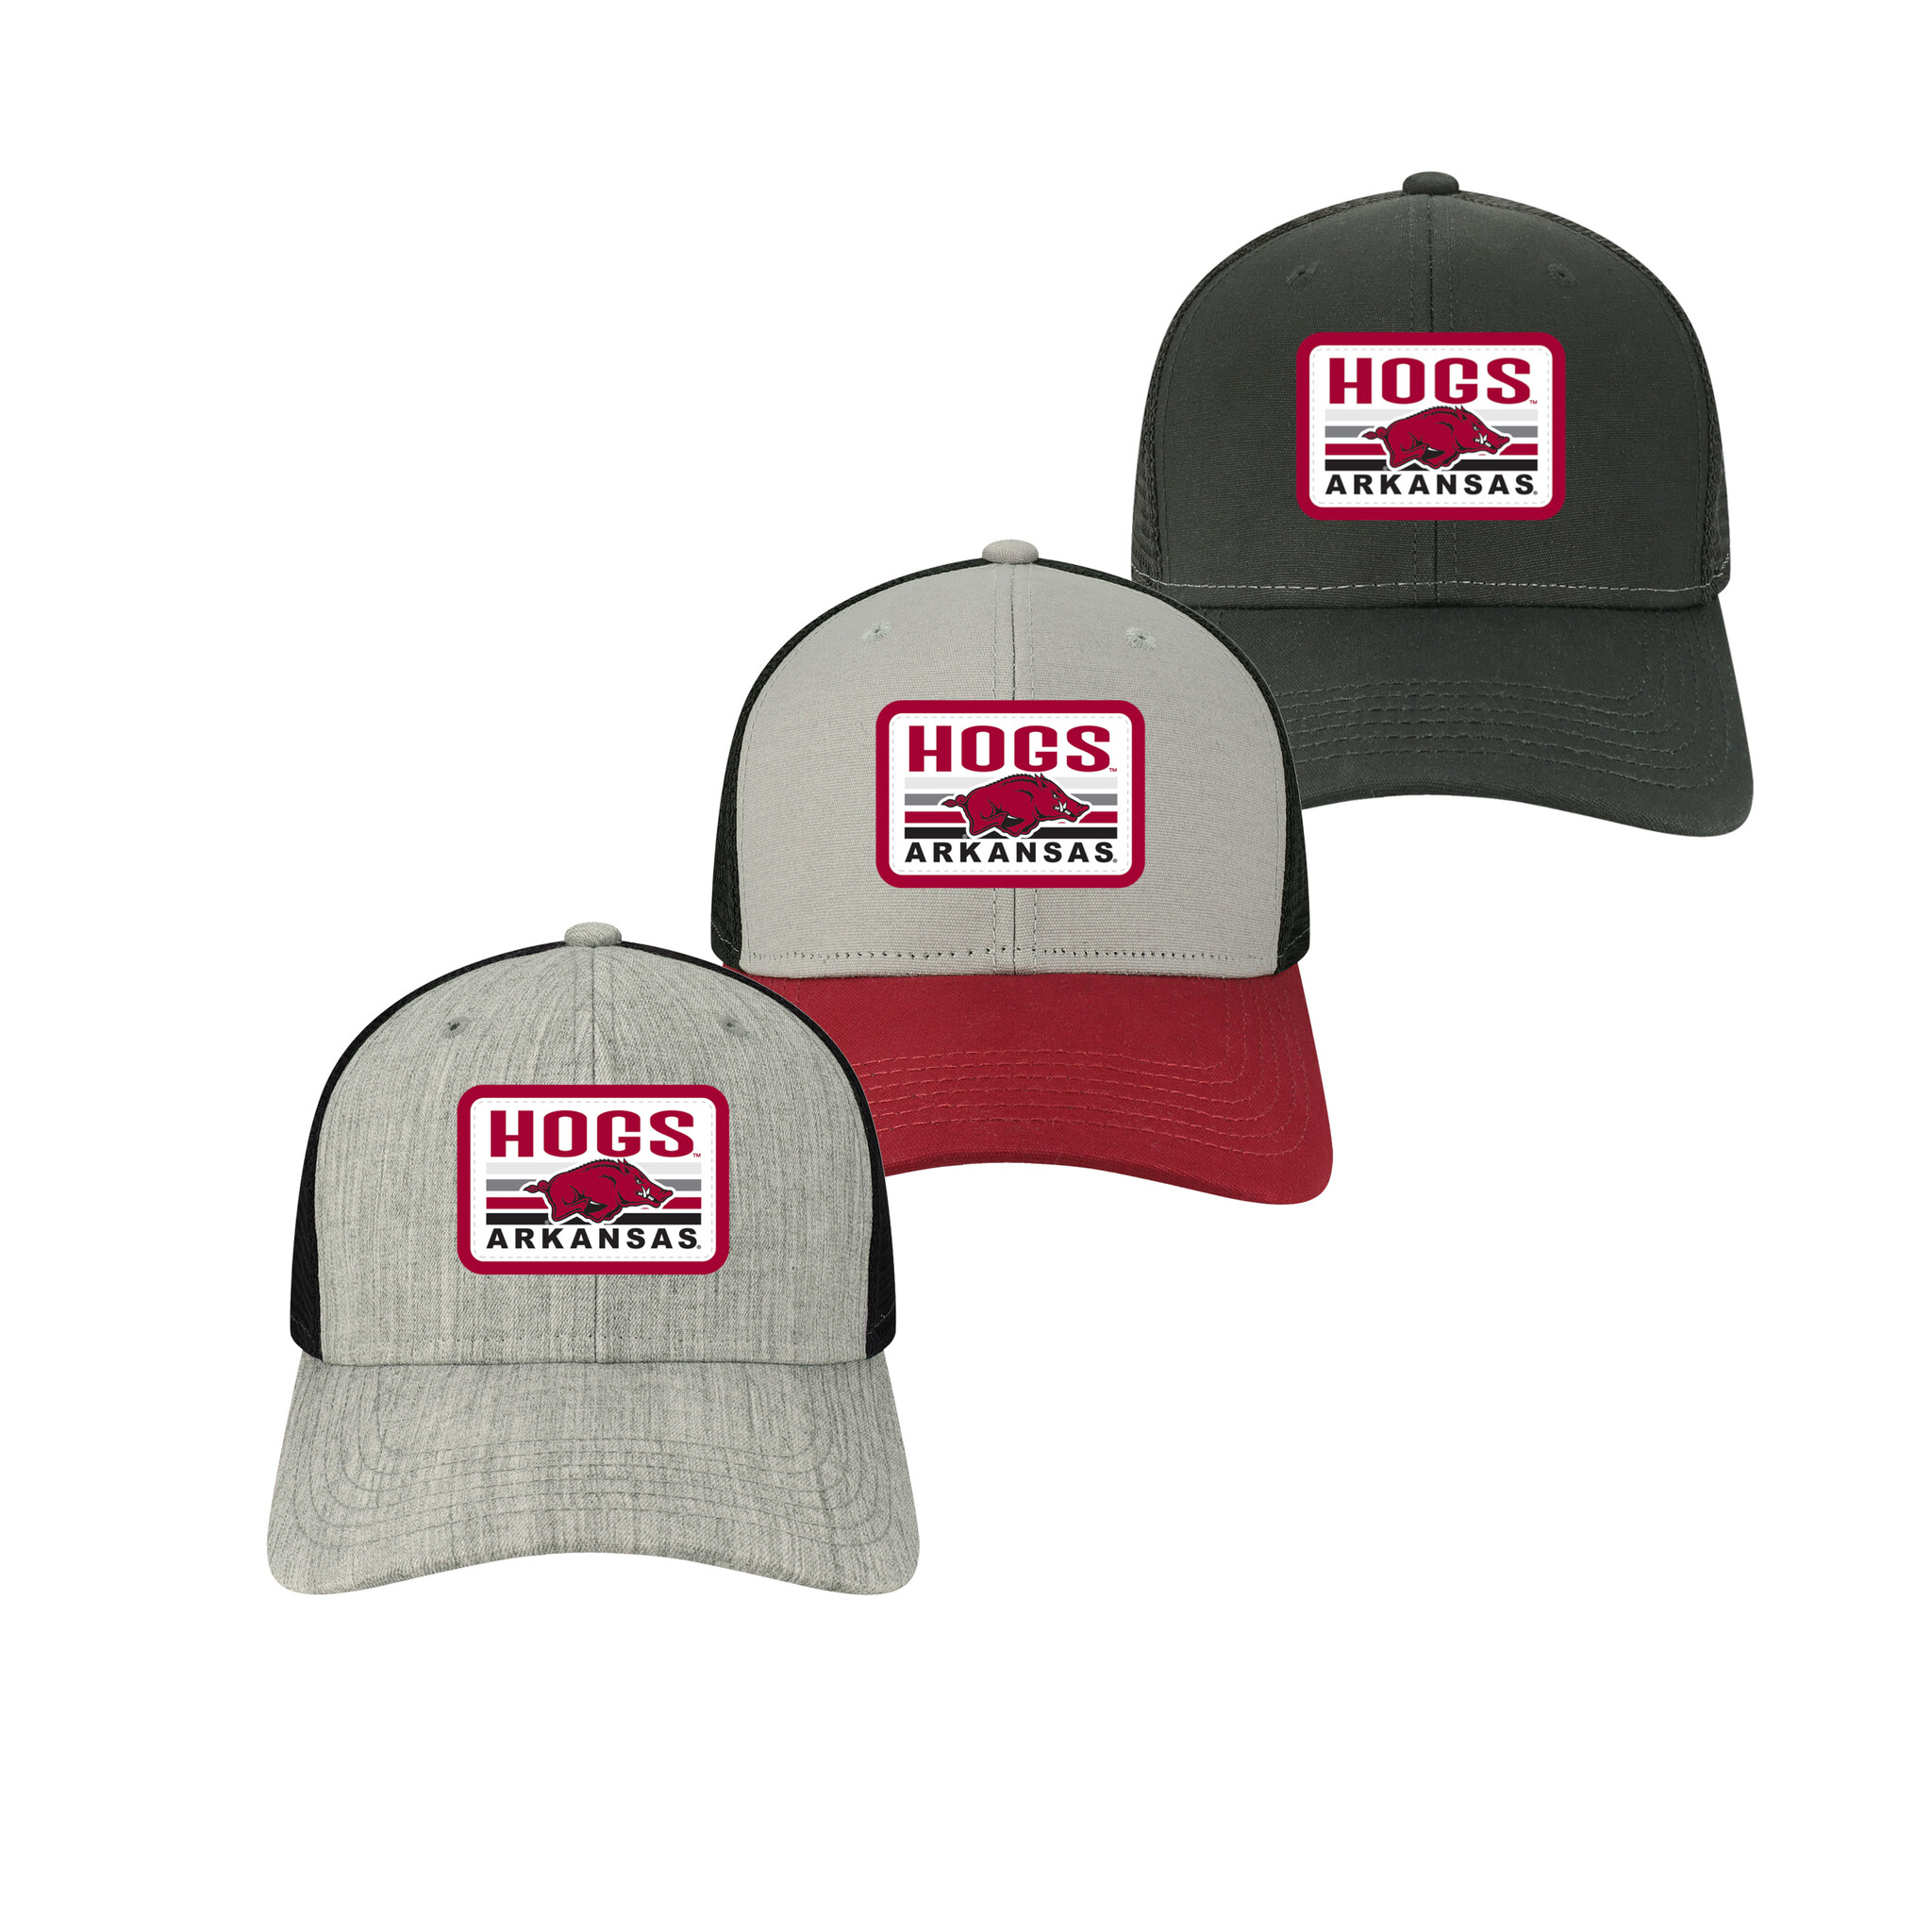 L2-League / Legacy HOGS Mid - Pro Snapback Patch Daybreak Hat